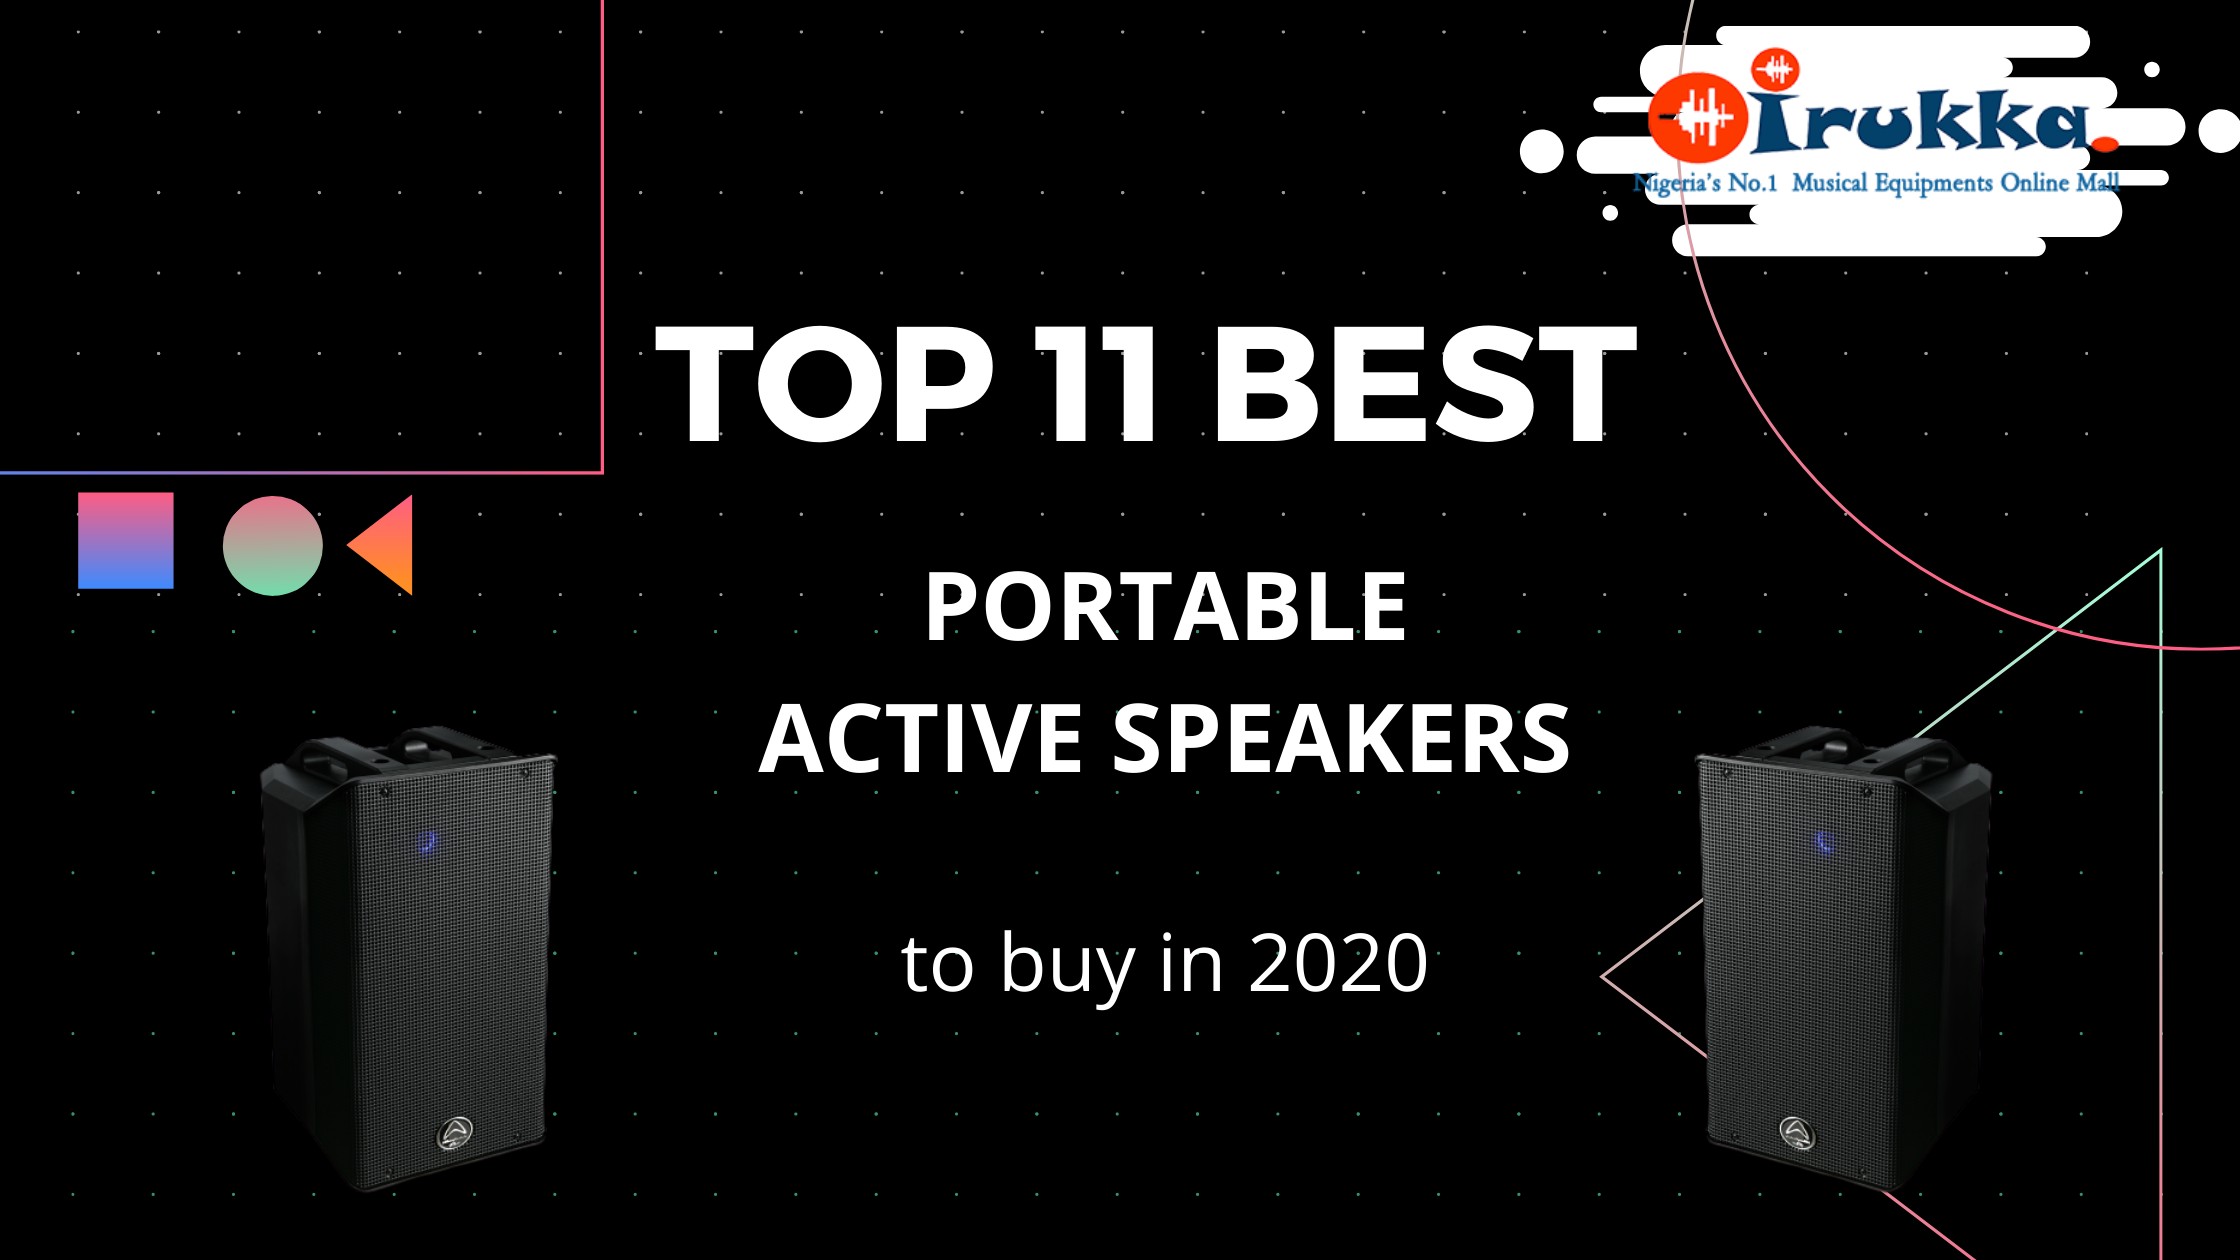 irukka online-TOP 11 BEST PORTABLE SPEAKERS TO BUY IN 2020 wharfedale active speakers in nigeria- where to but outdoor speakers